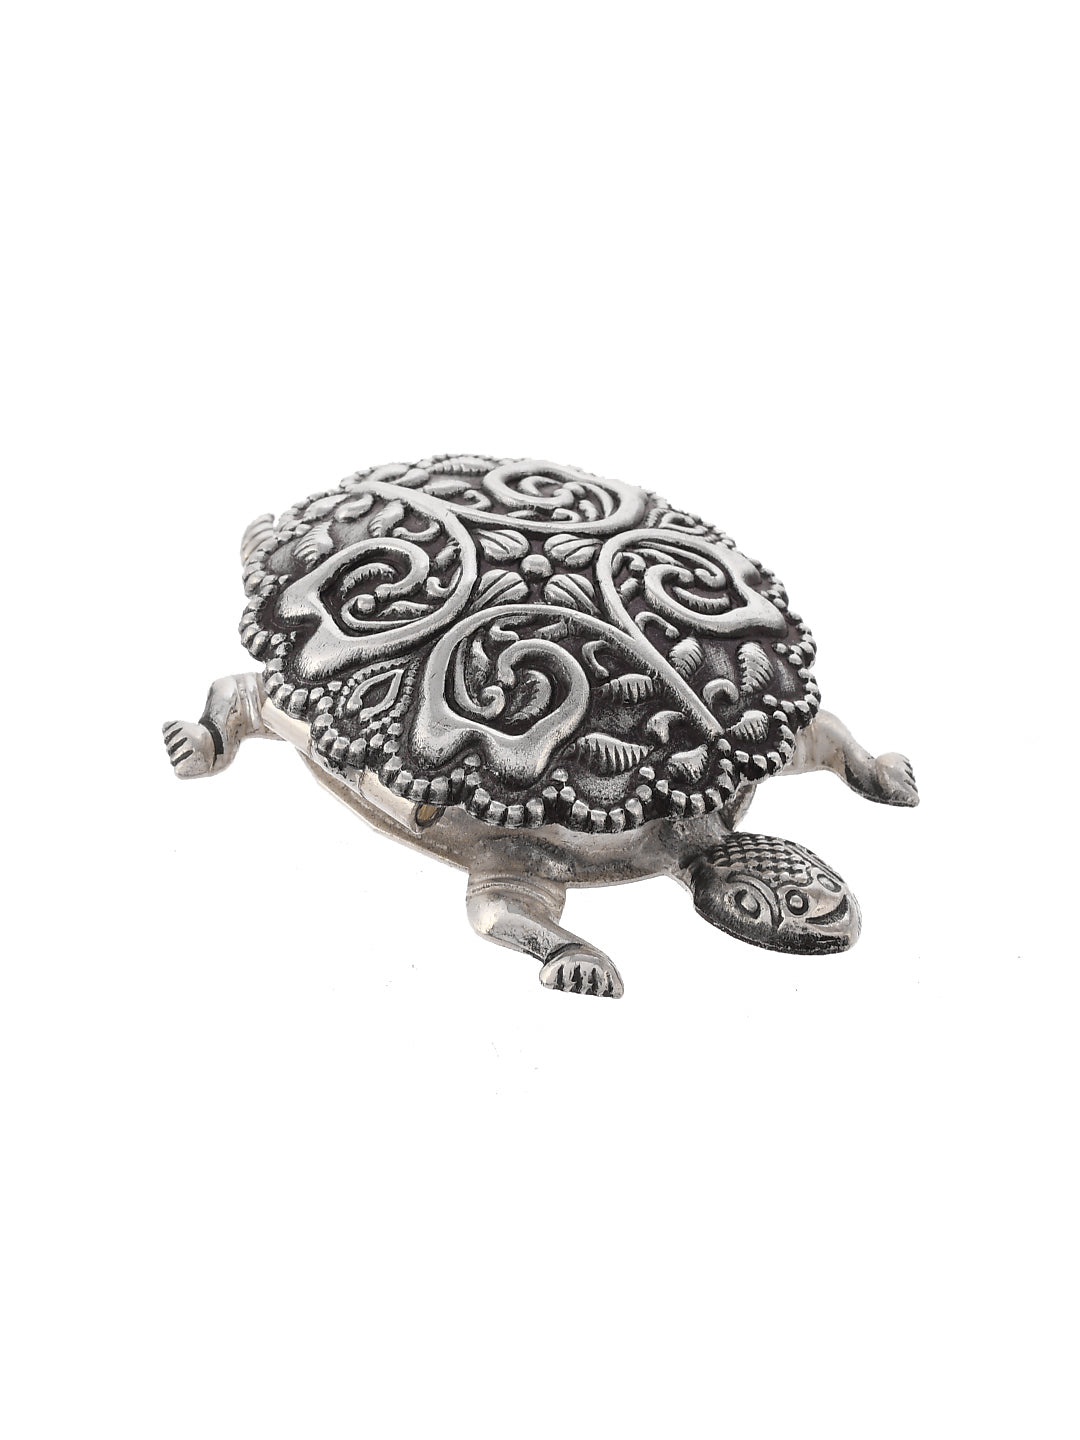 999 Sterling Silver Tortoise Roli Chawal Box for Pooja and Mandir